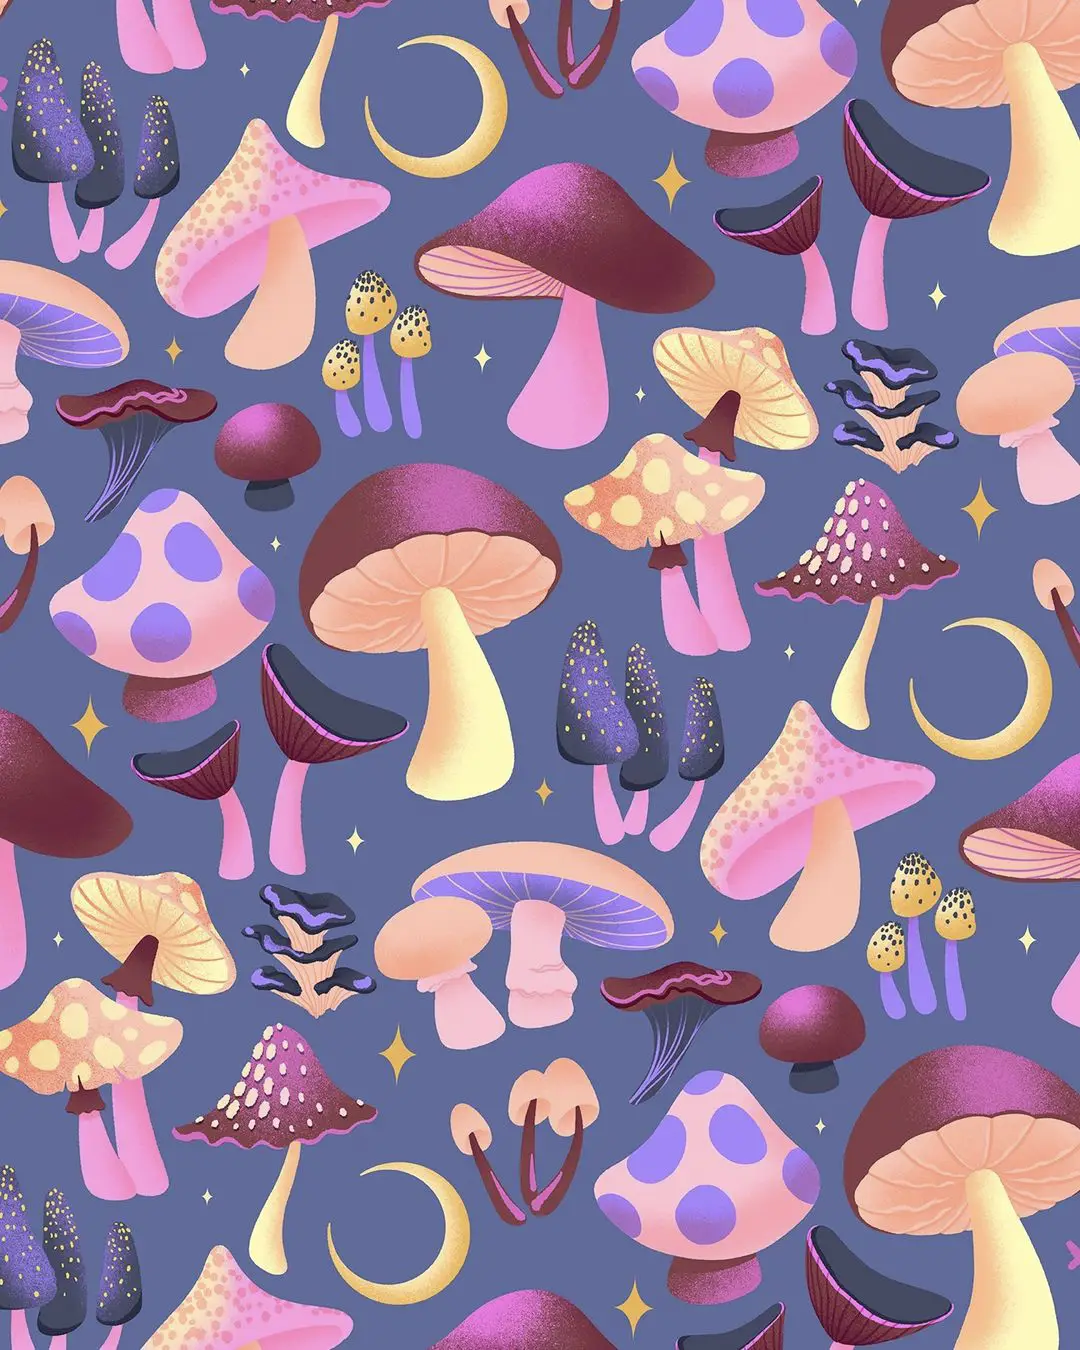 Sweet Spring Instagram Art Challenge - Fantastic Fungi - heyalissandra